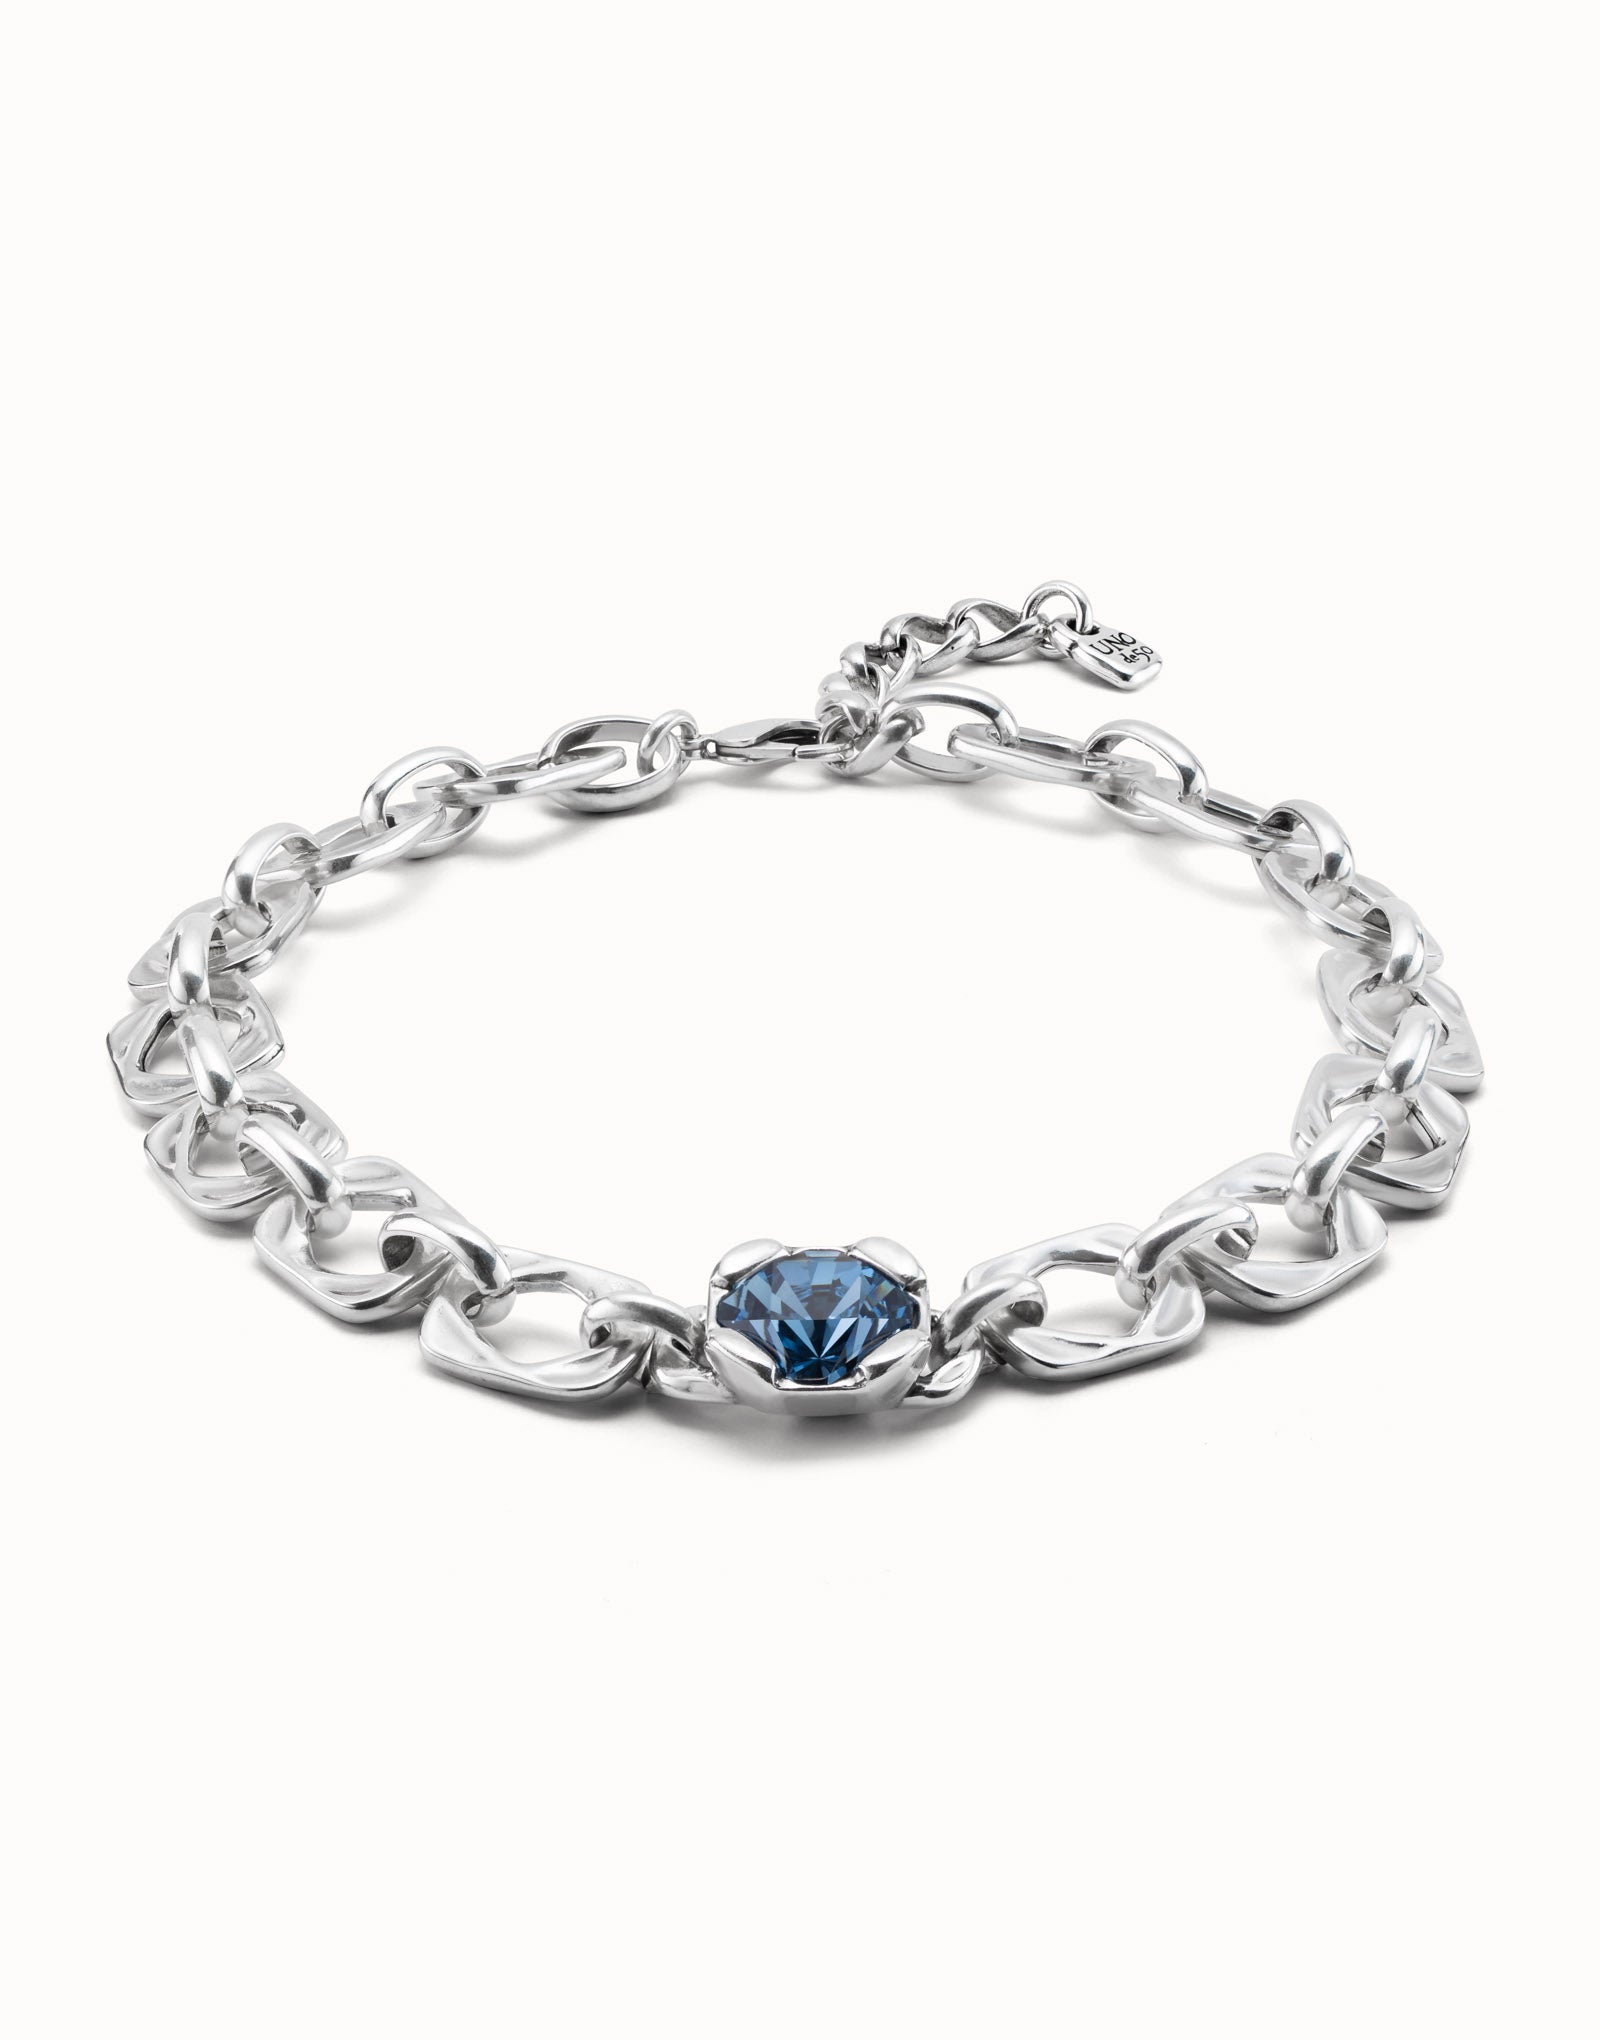 Marvelous Necklace | Blue Crystal